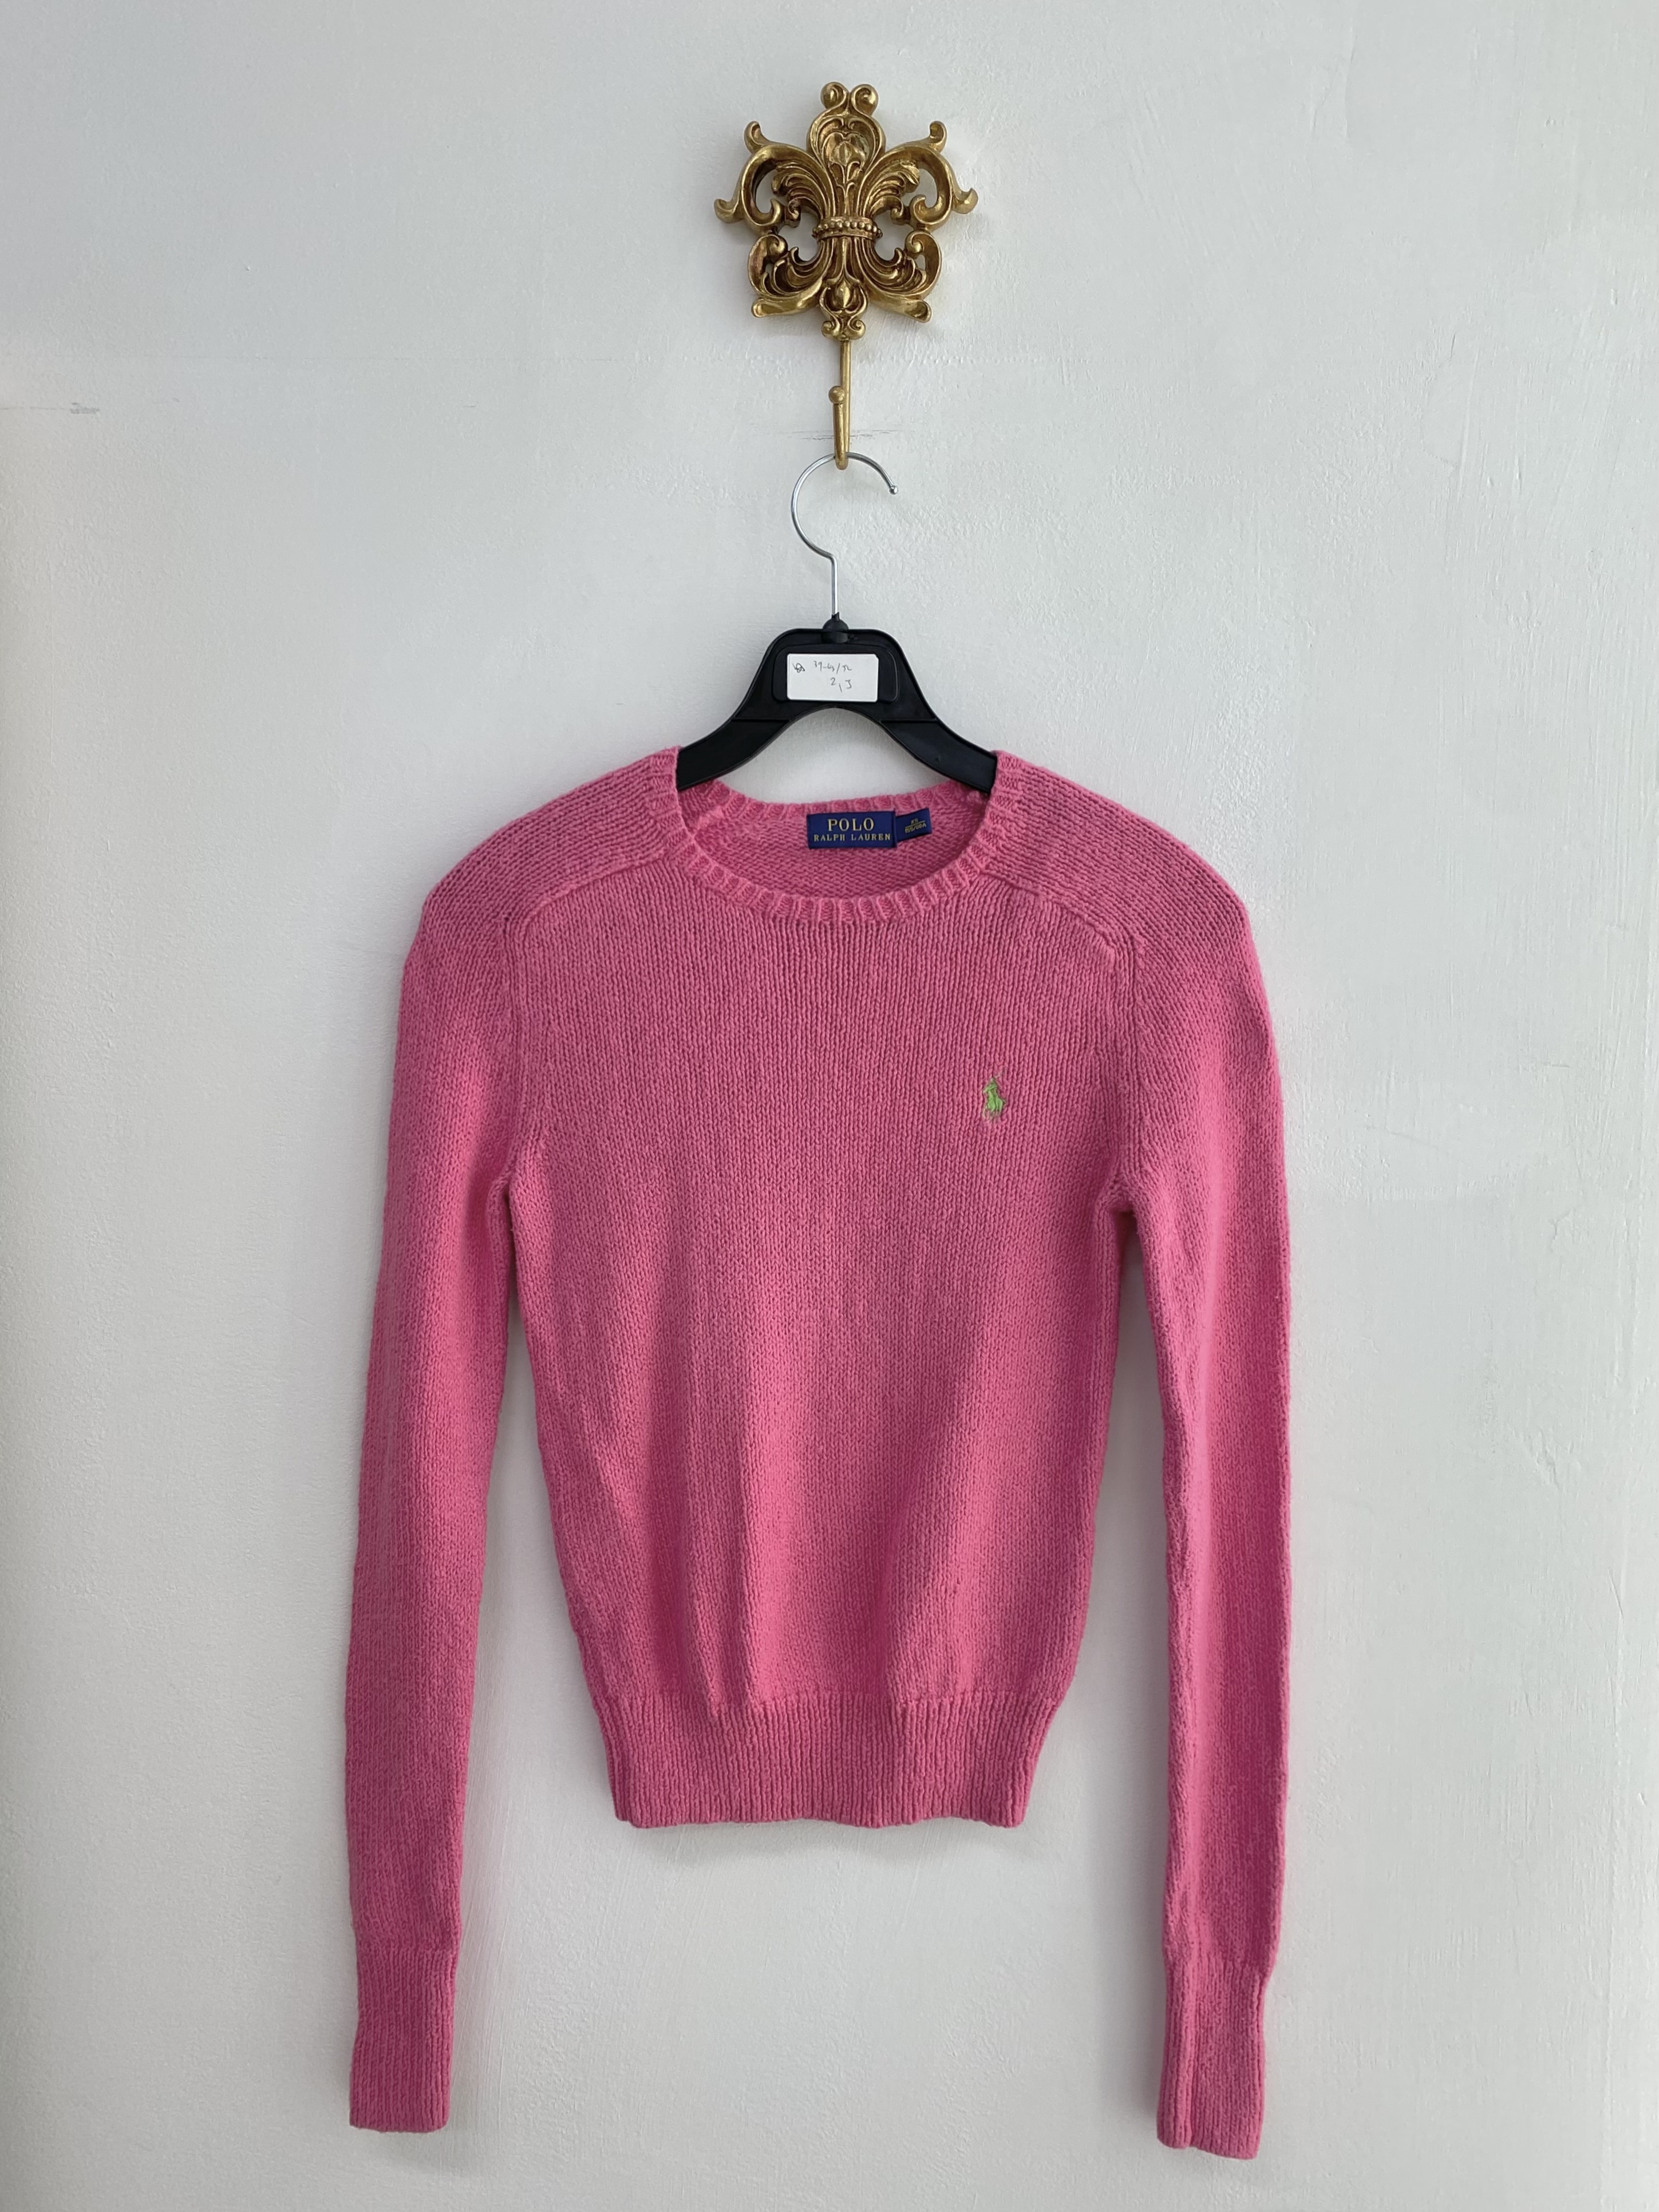 Polo Ralph Lauren neon pink green logo cotton knit